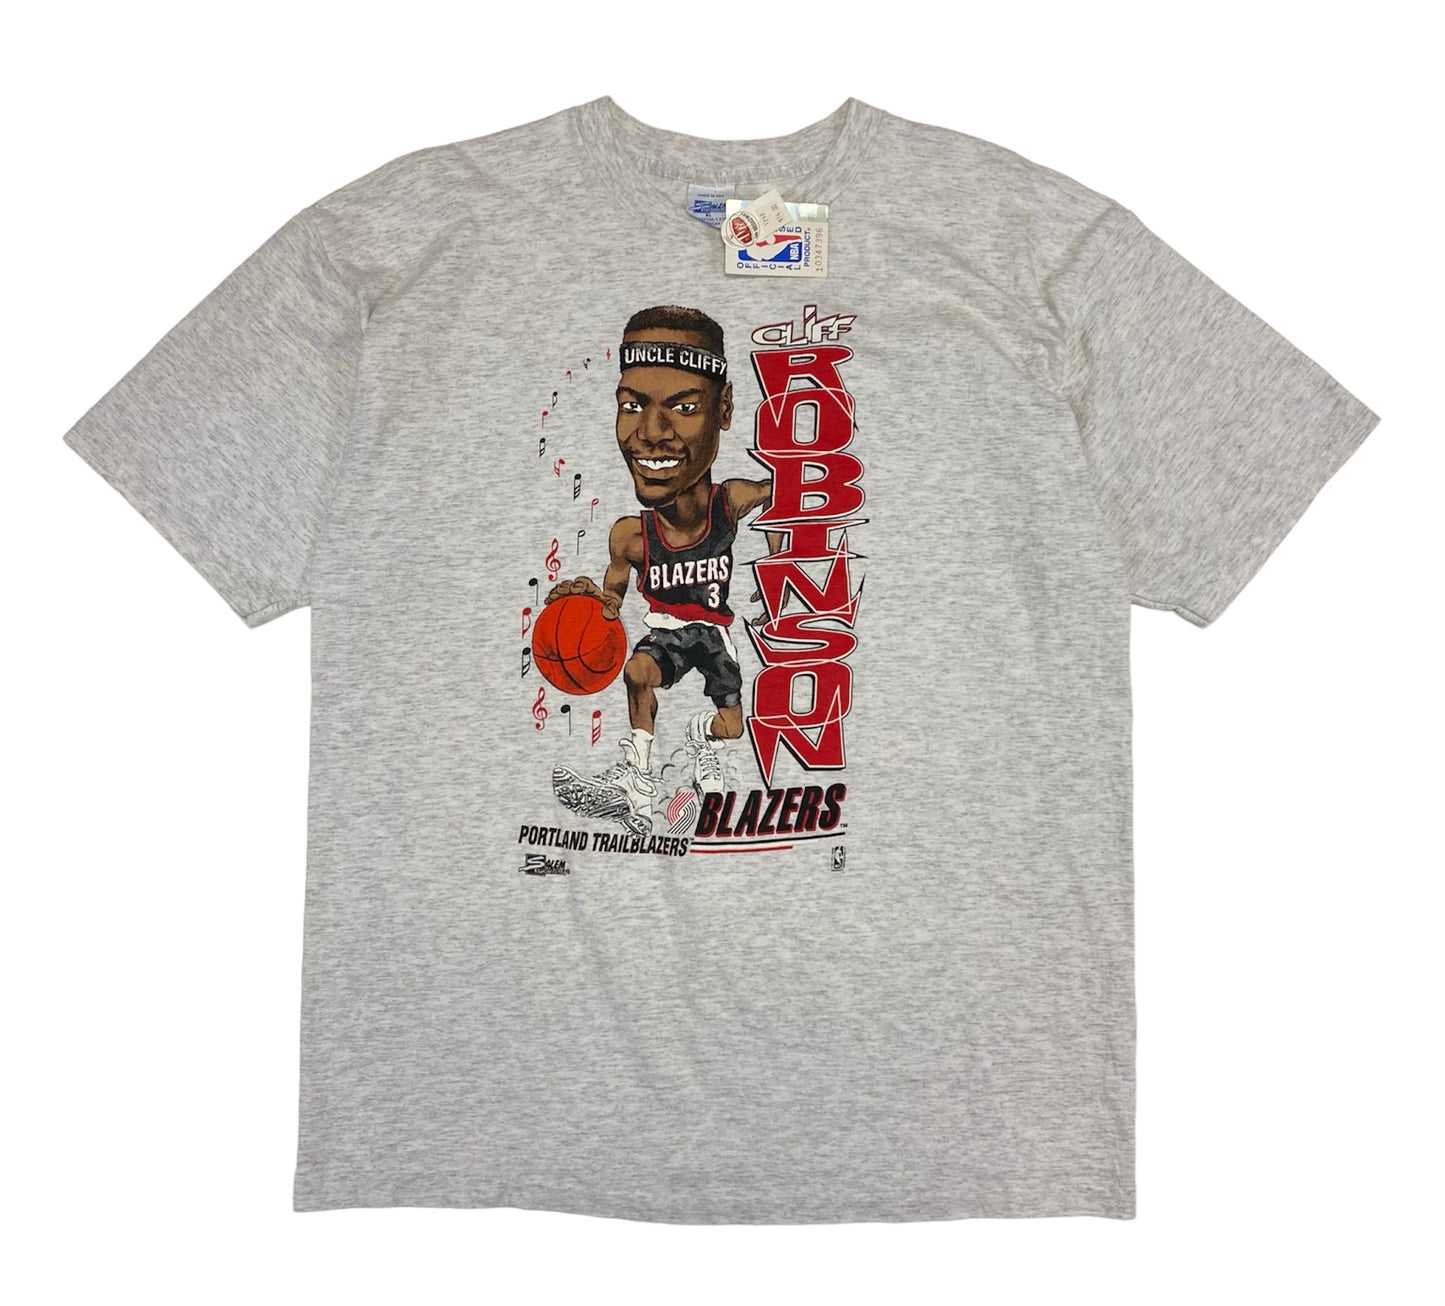 1990’s Cliff Robinson “Uncle Cliffy” Salem Sports Caricature T-Shirt XL